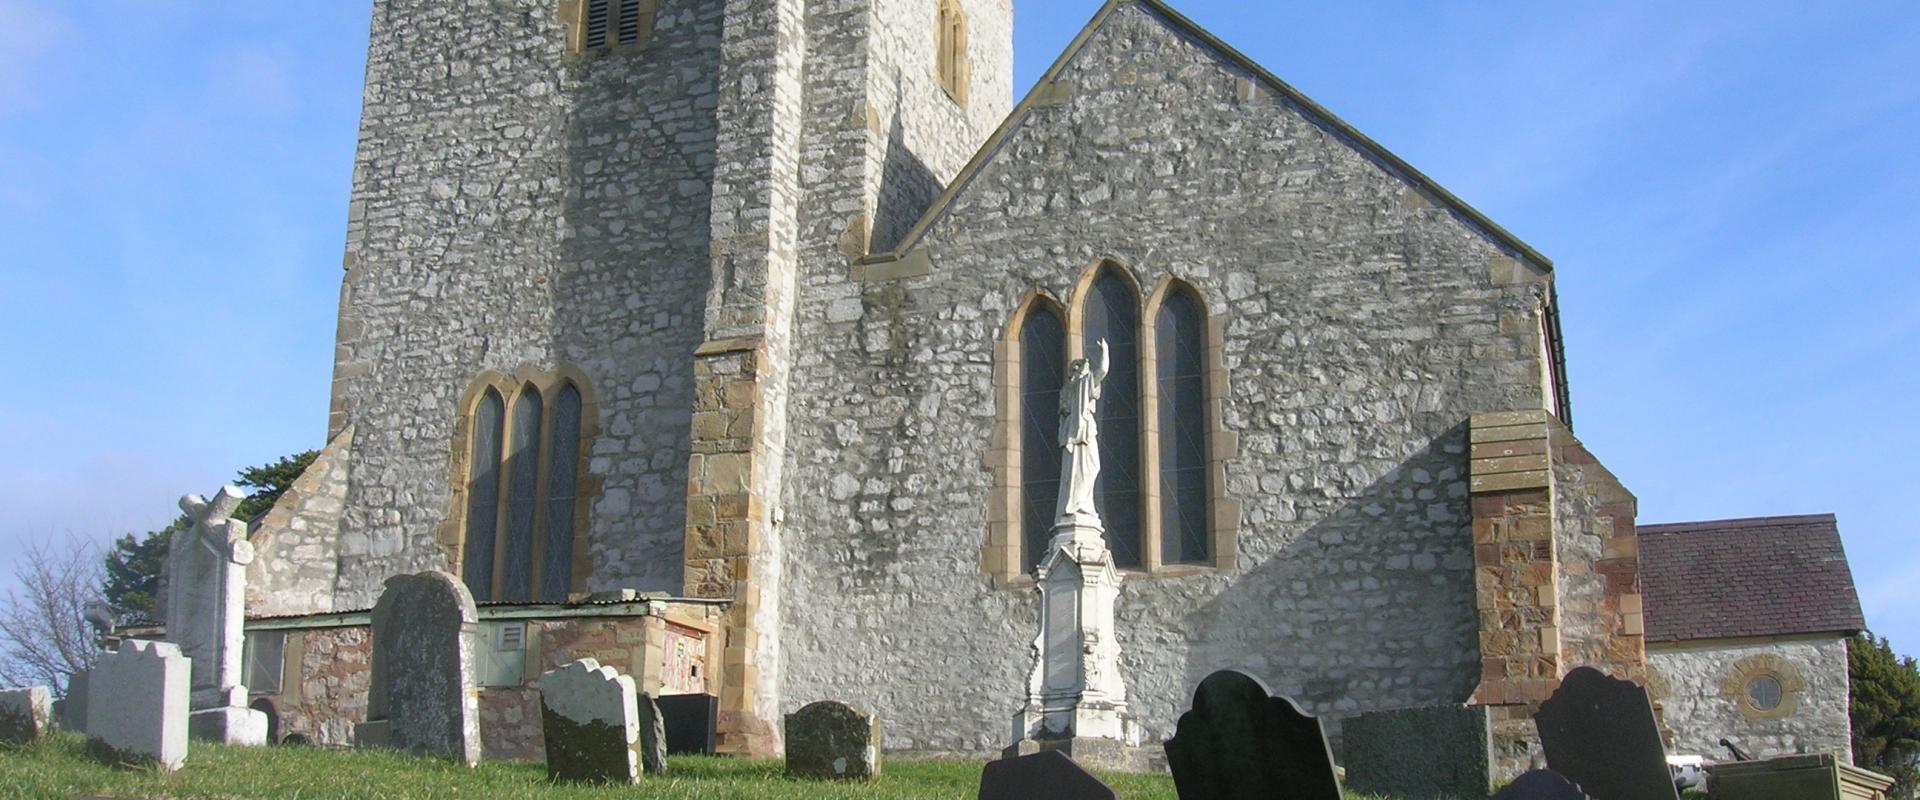 outside image of St Mary's Church, Rhuddlan